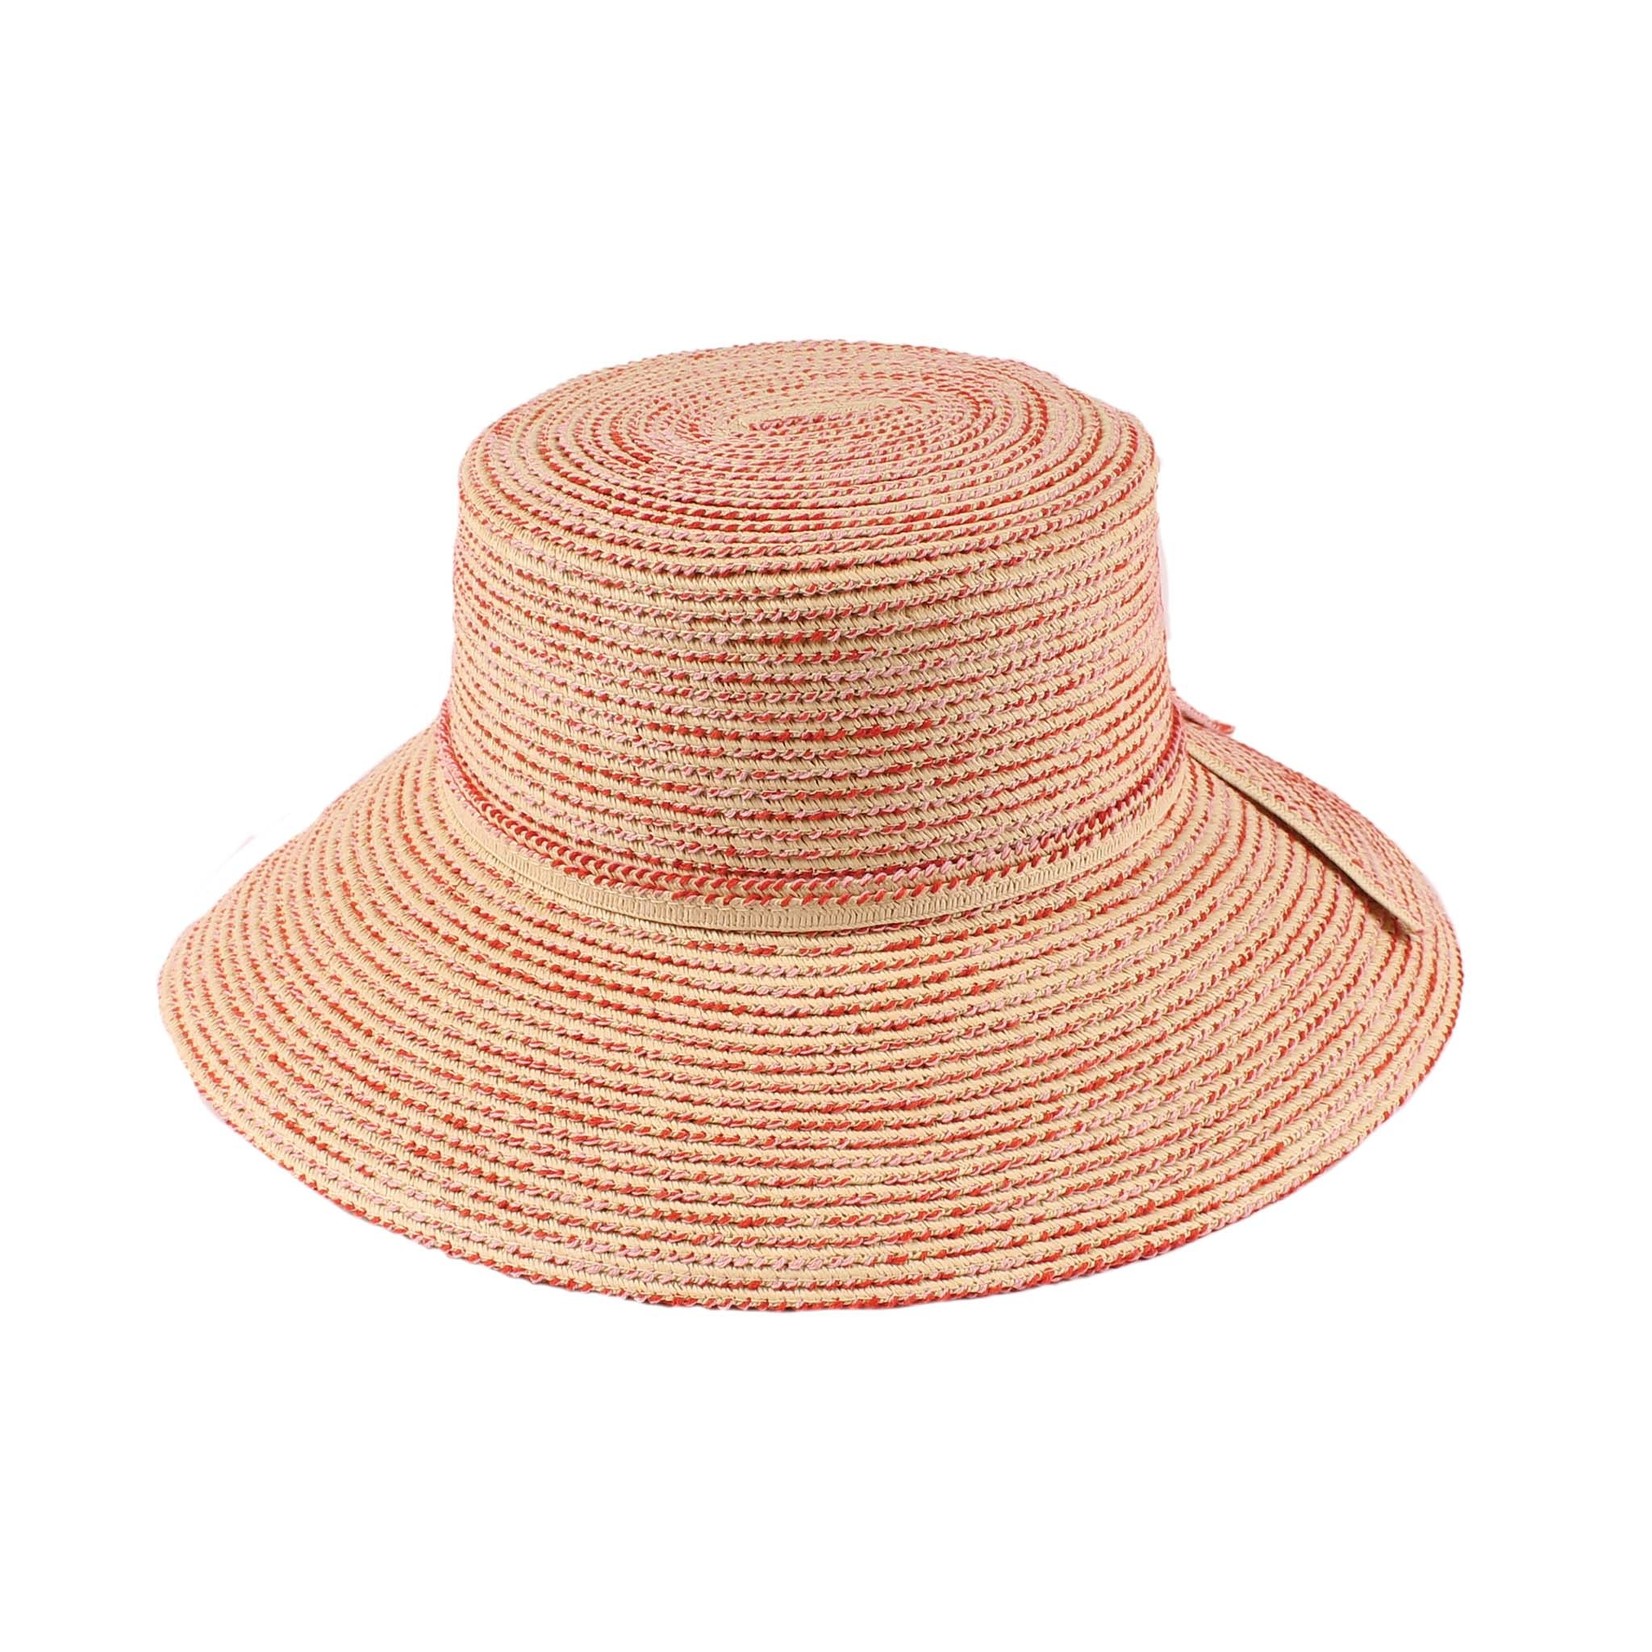 Jeanne Simmons Wide Brim Woven Hat w/ Flat Crown in Red/Tan